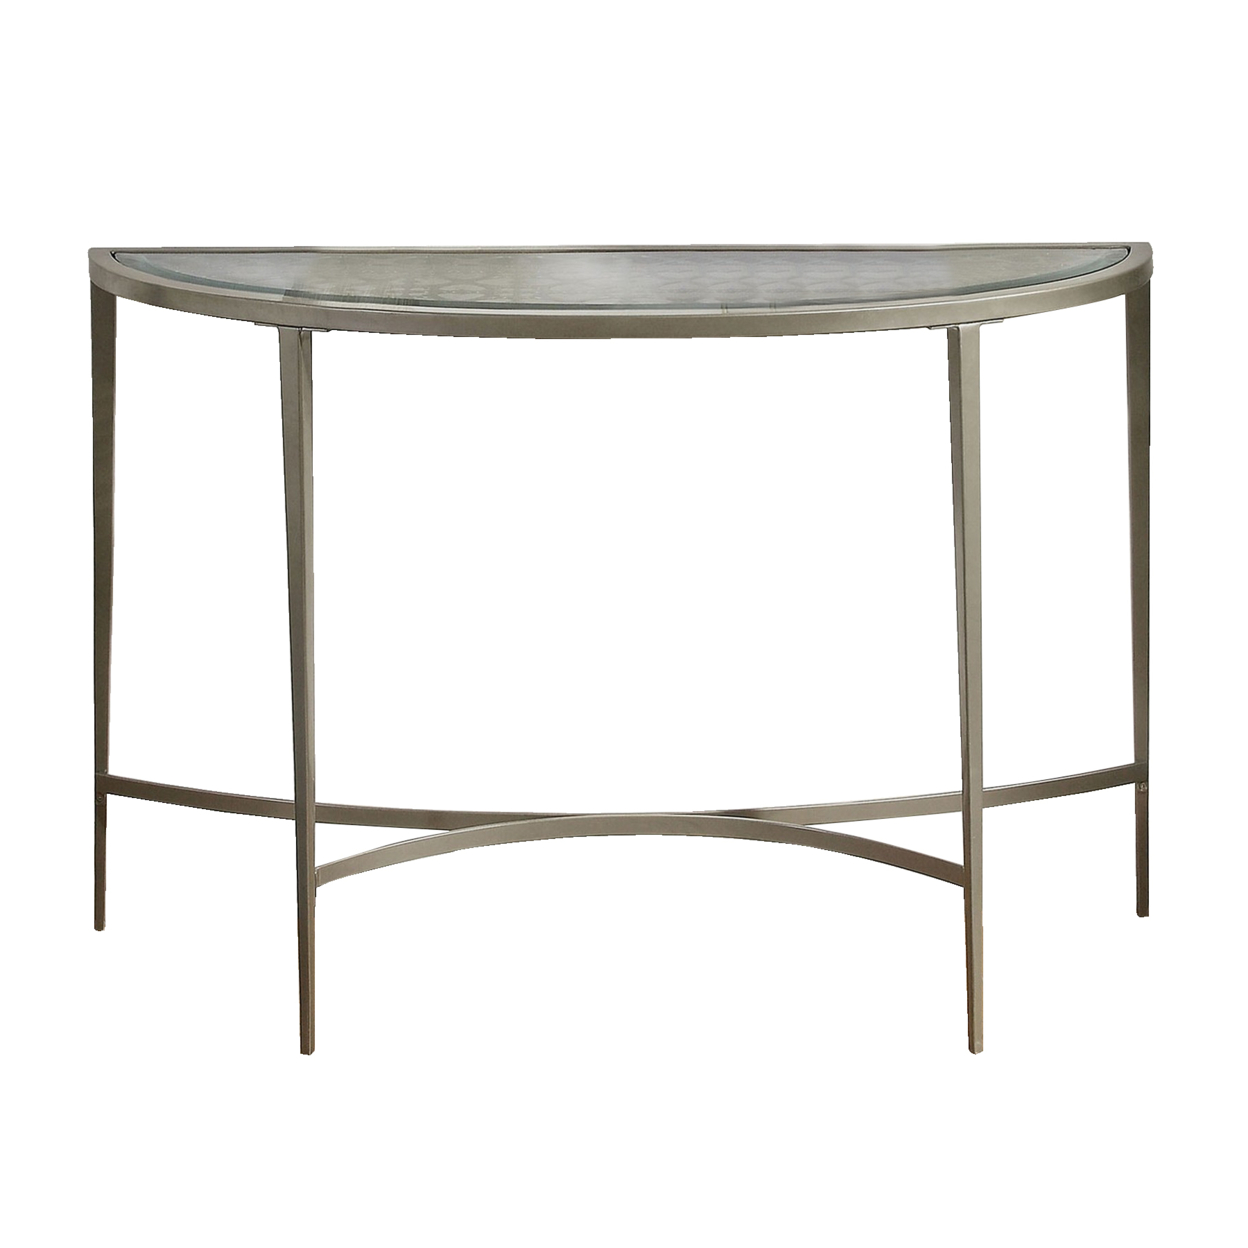 Semicircular Glass Top Sofa Table With Sleek Tapered Legs, Silver- Saltoro Sherpi